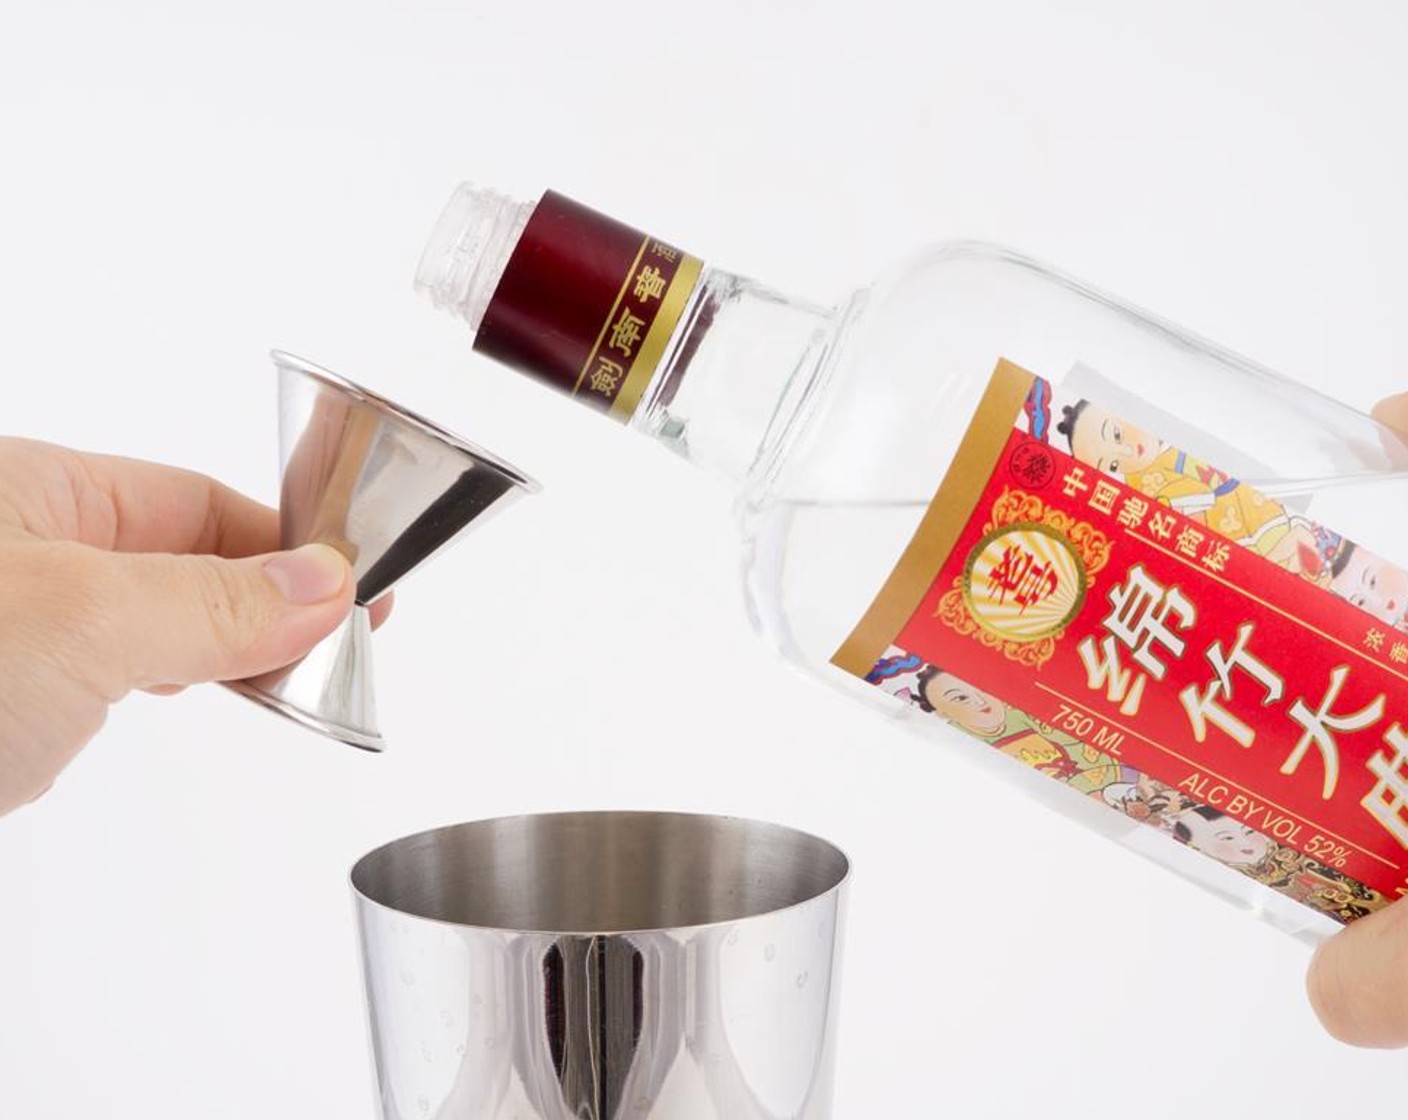 step 1 Pour Mianzhu Daqu Laohao (1.3 fl oz), Disaronno (0.5 fl oz), Pineapple Juice (1.5 fl oz), and Maitai Mix (1 fl oz) into a cocktail shaker filled with Ice (as needed).